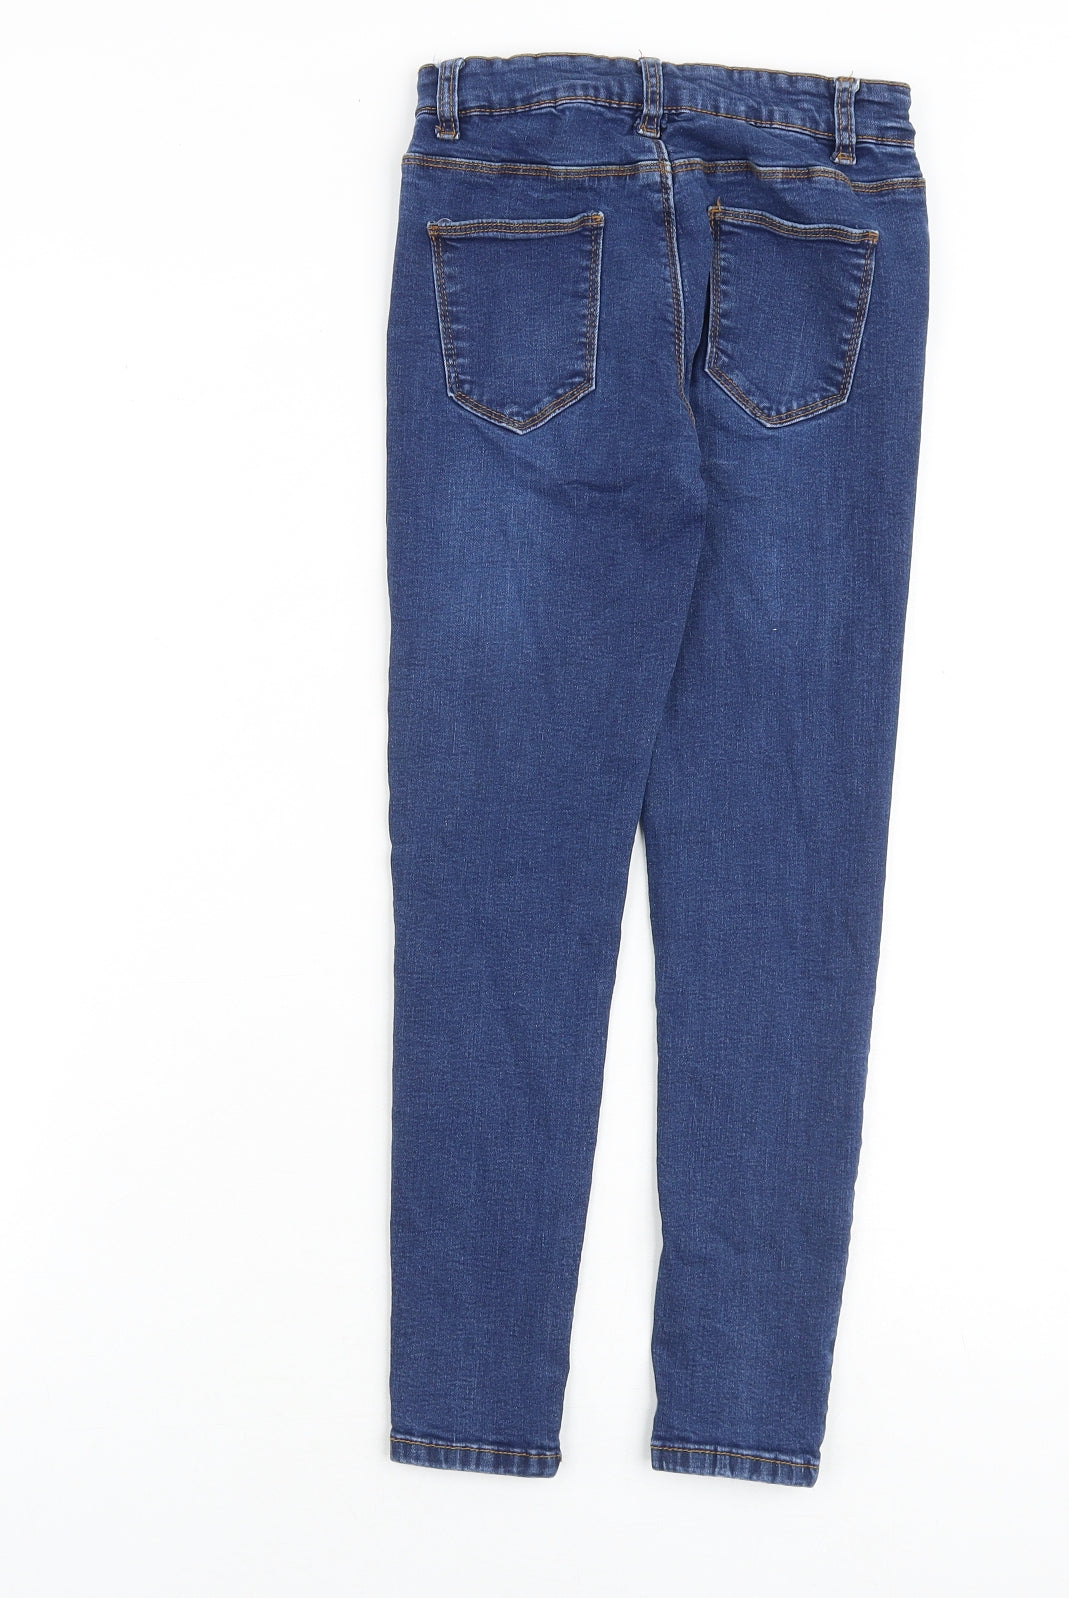 Denim & Co. Girls Blue Cotton Skinny Jeans Size 9-10 Years L23 in Regular Zip